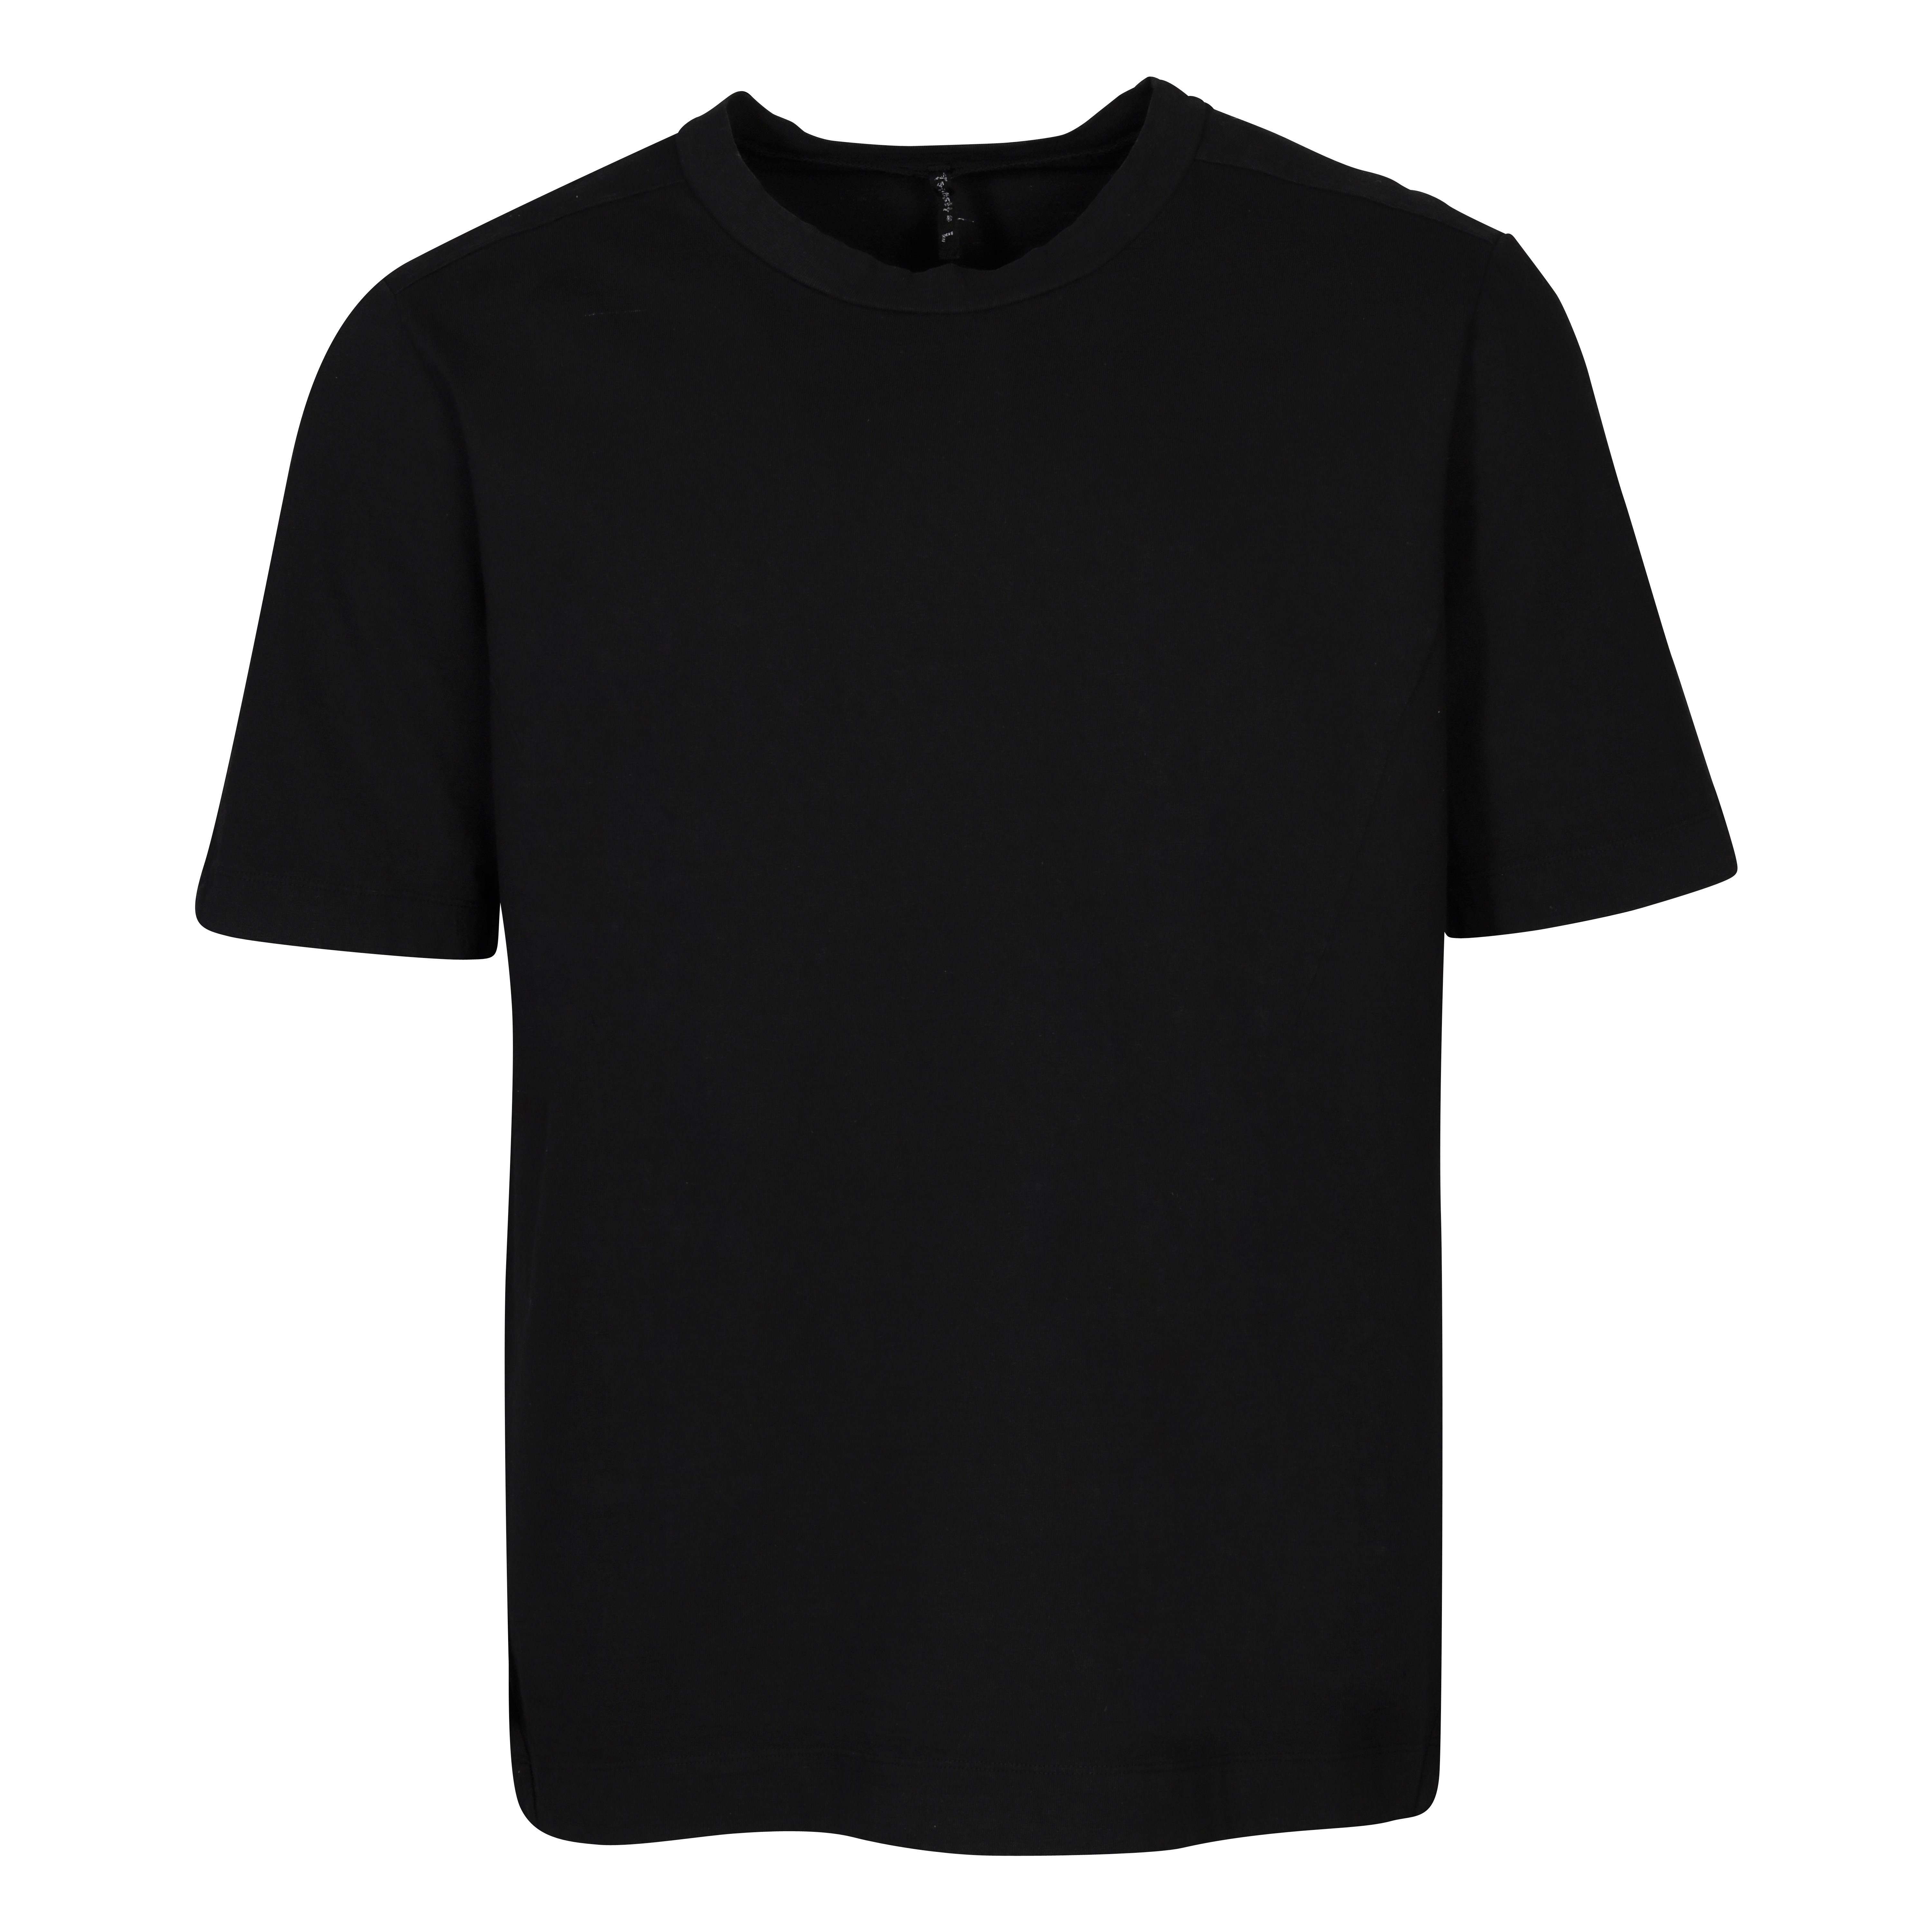 Transit Uomo Heavy T-Shirt in Black S